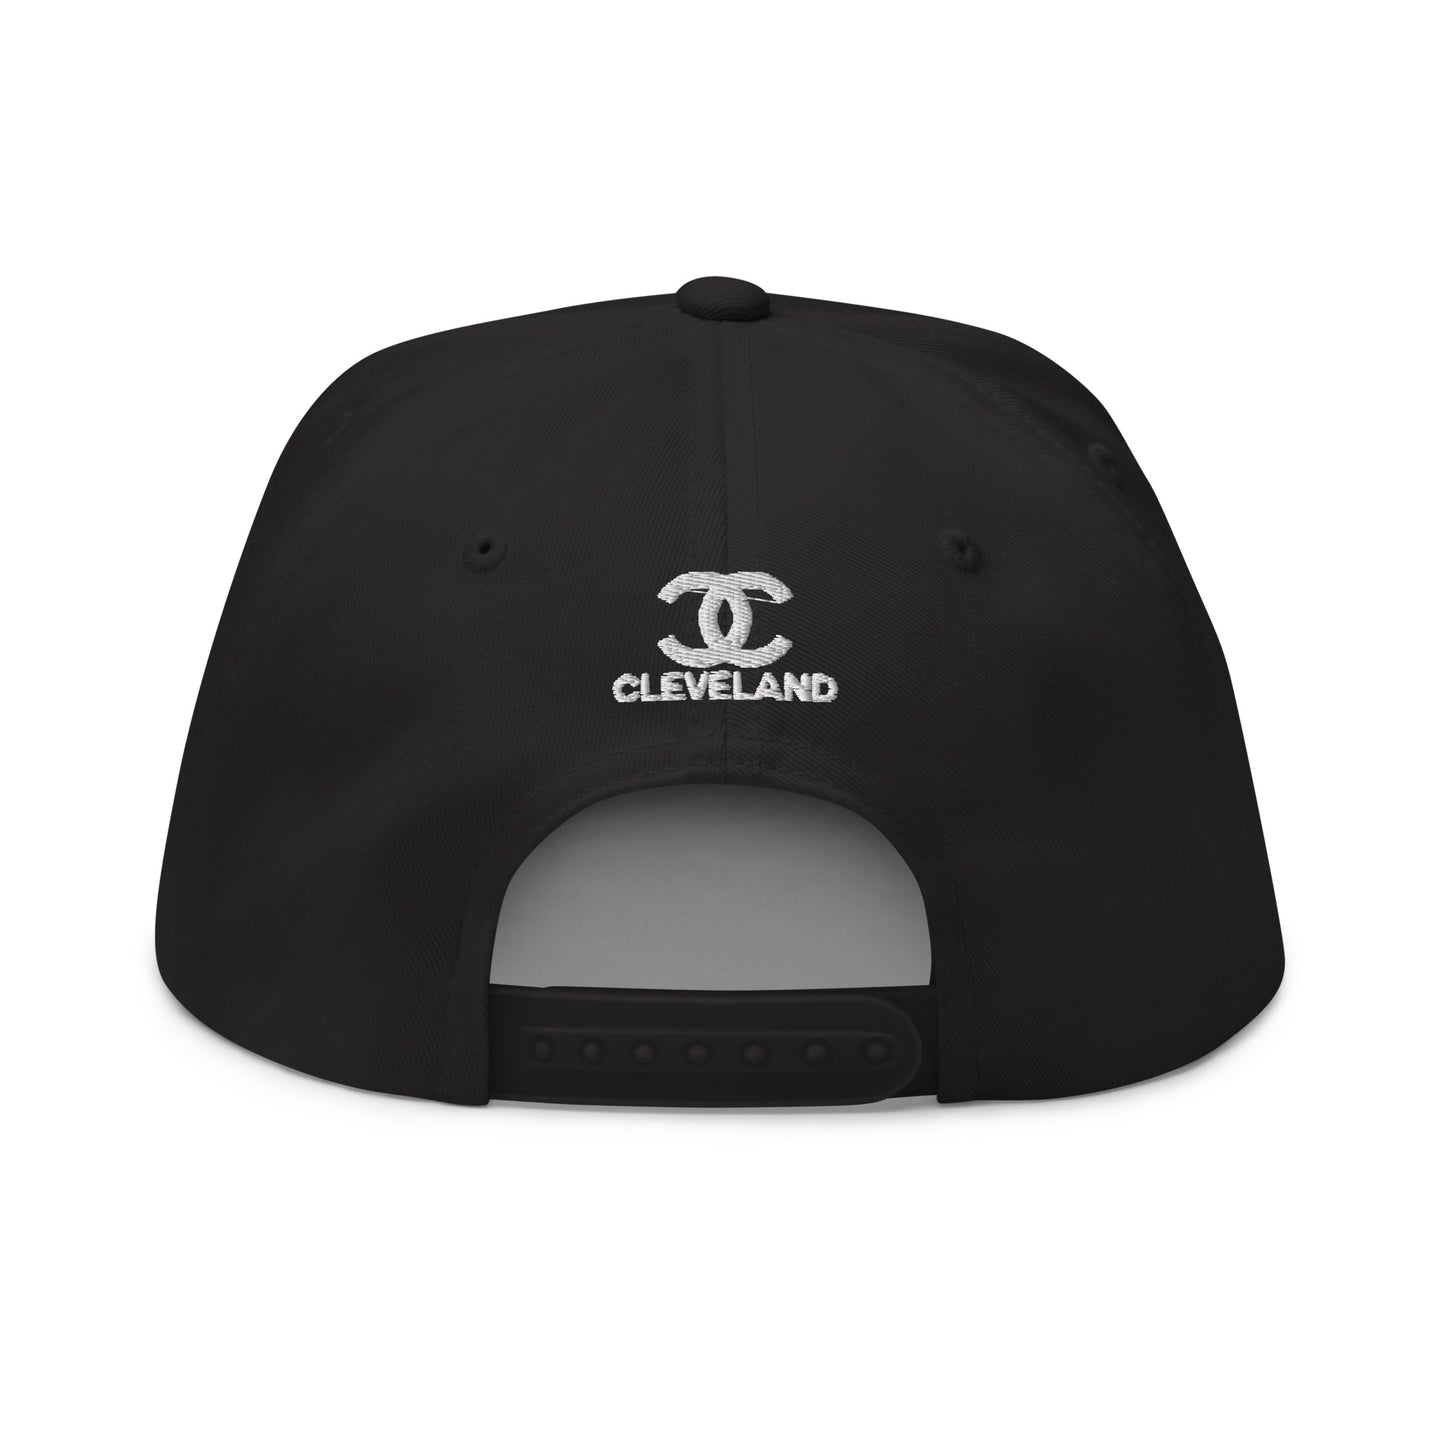 CC Cleveland Snapback Hat